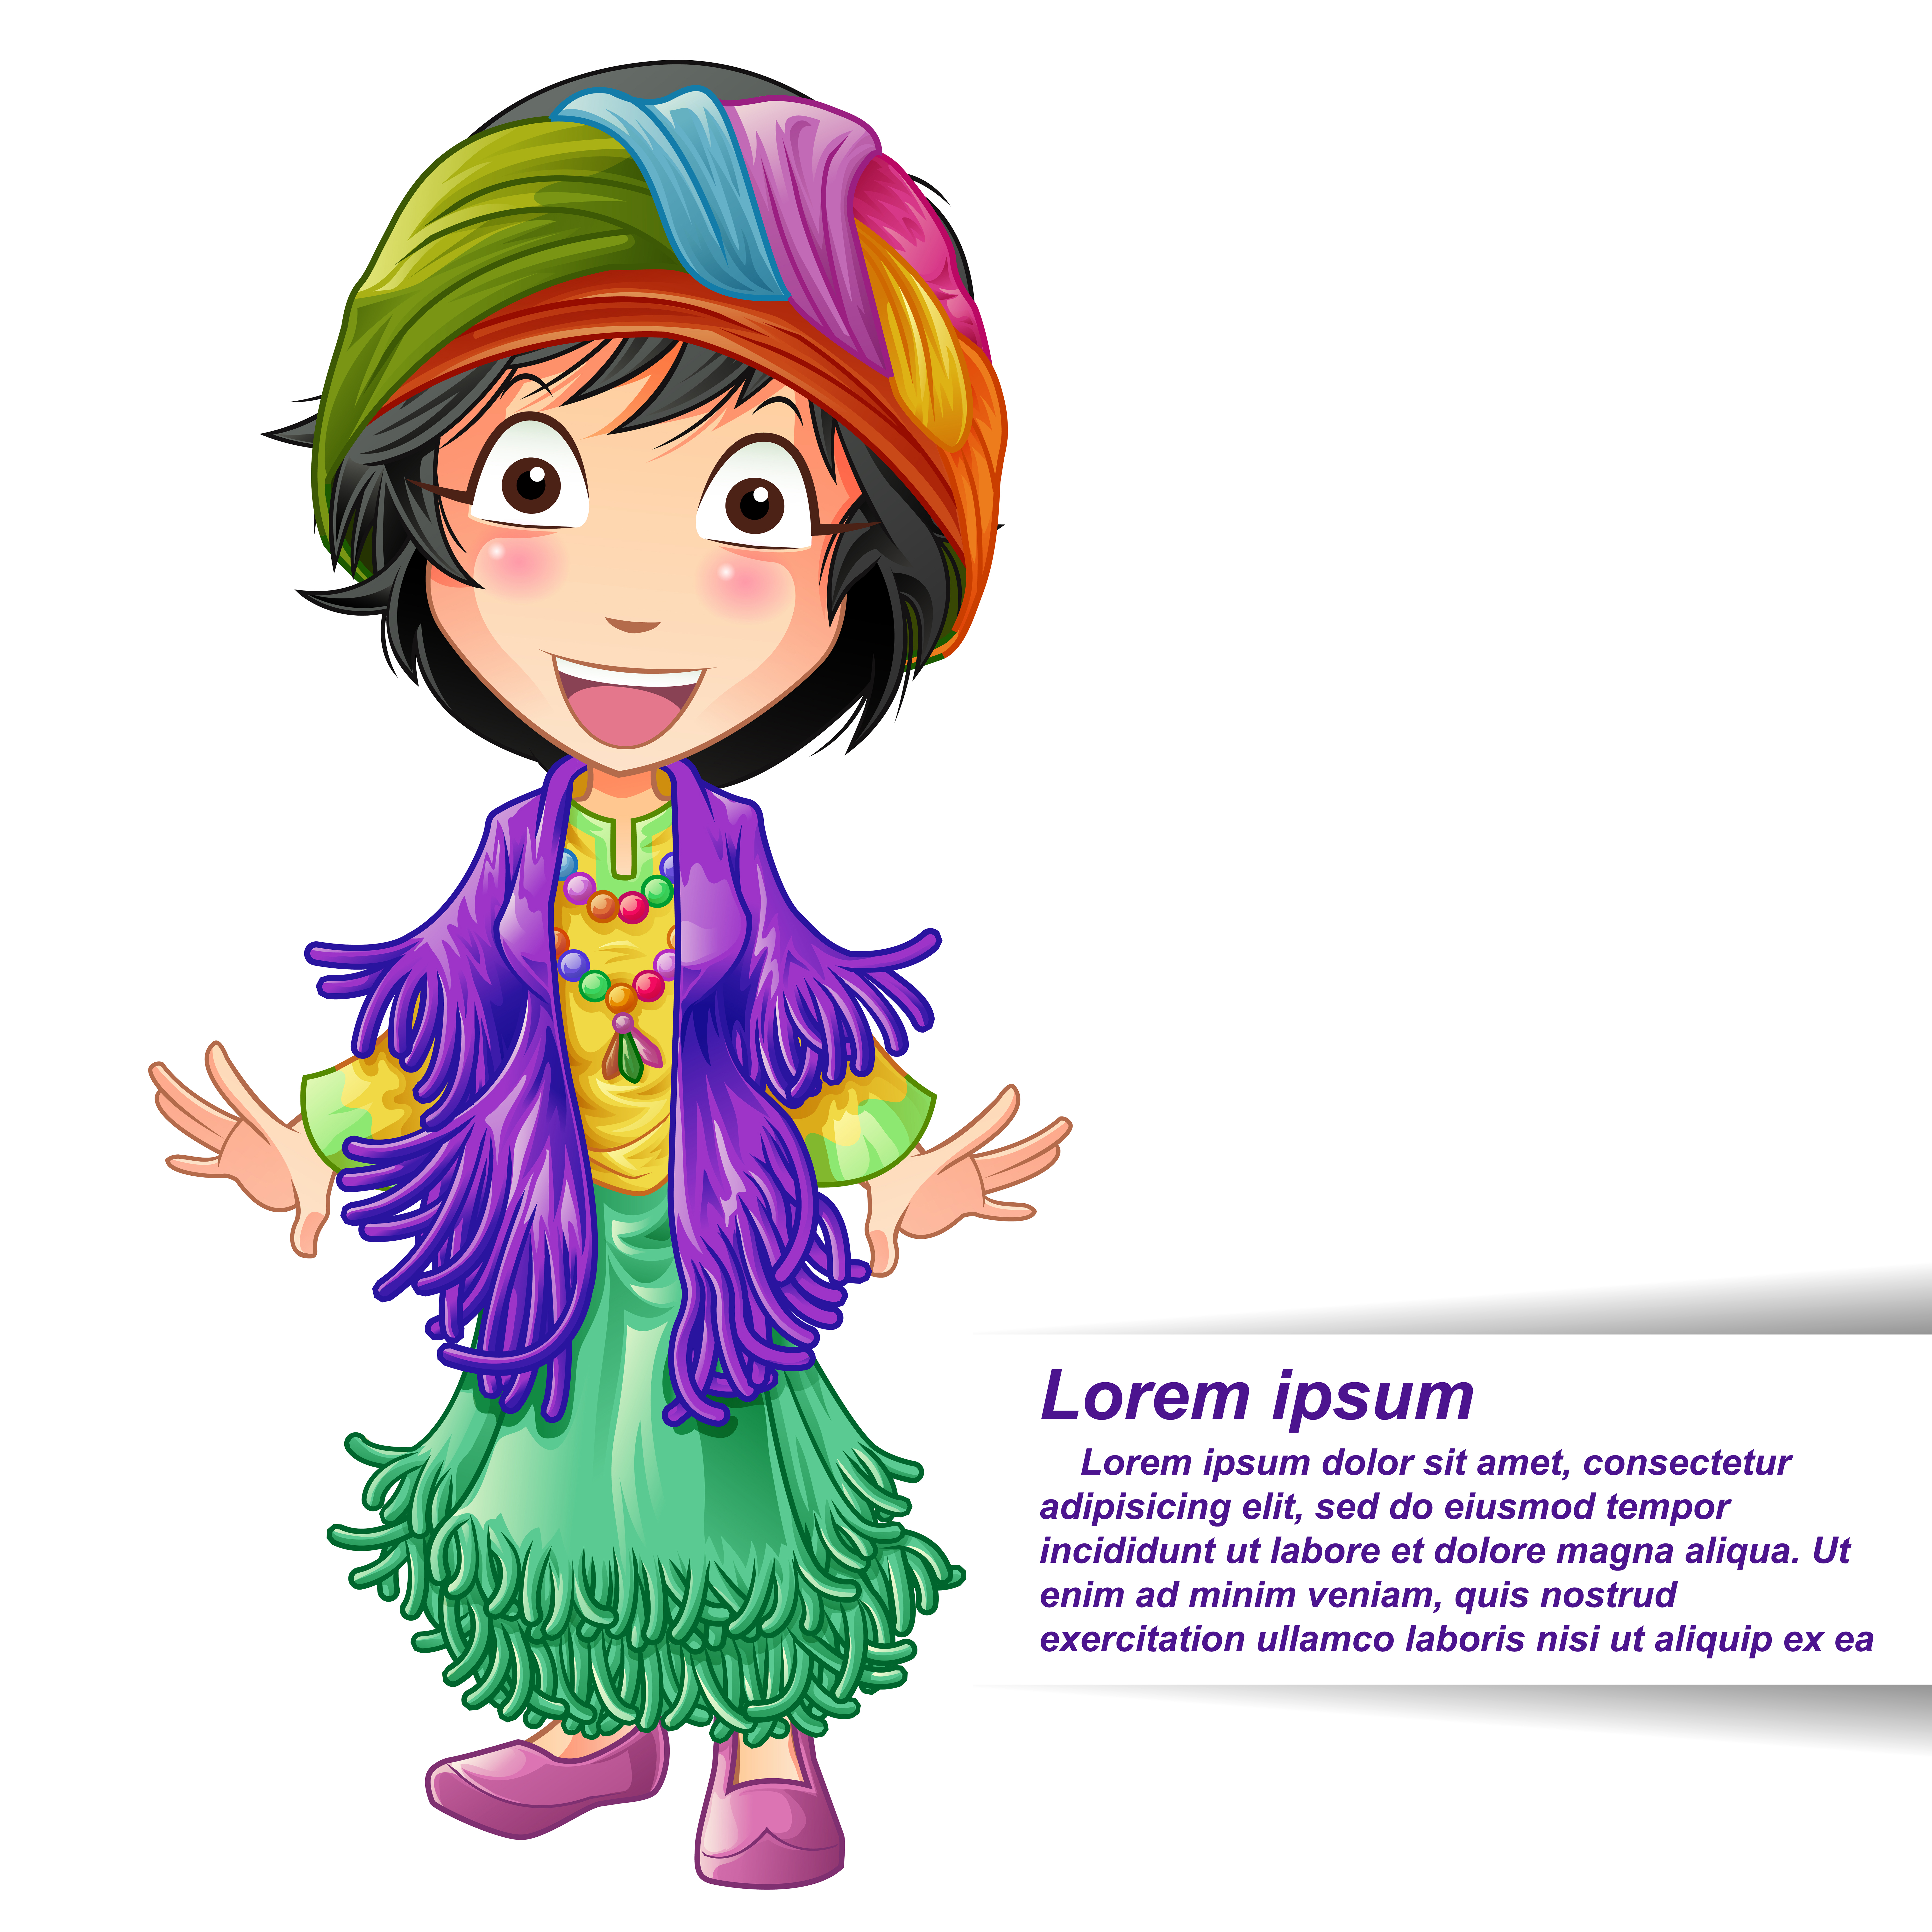 Fortune Teller Character In Cartoon Style Download Free Vectors Clipart Graphics Vector Art